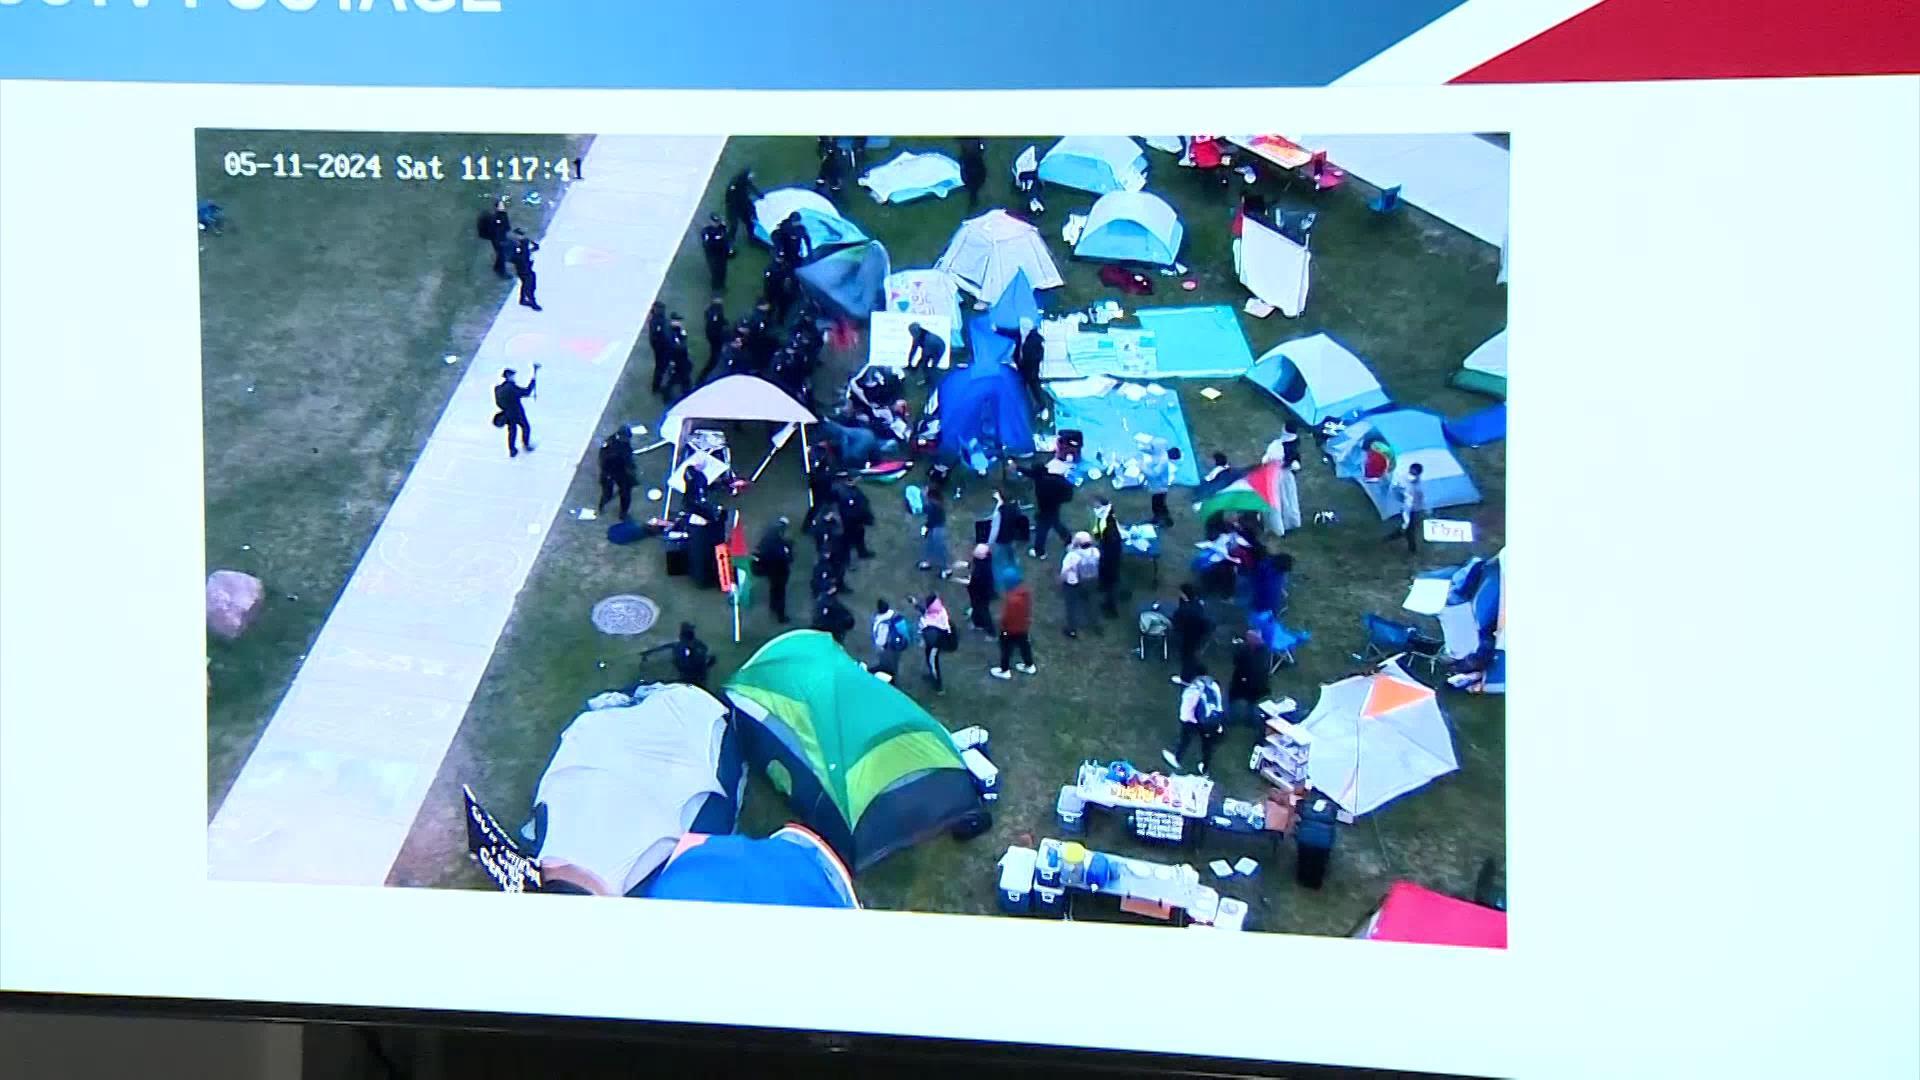 EPS provide new details about encampment raid at University of Alberta